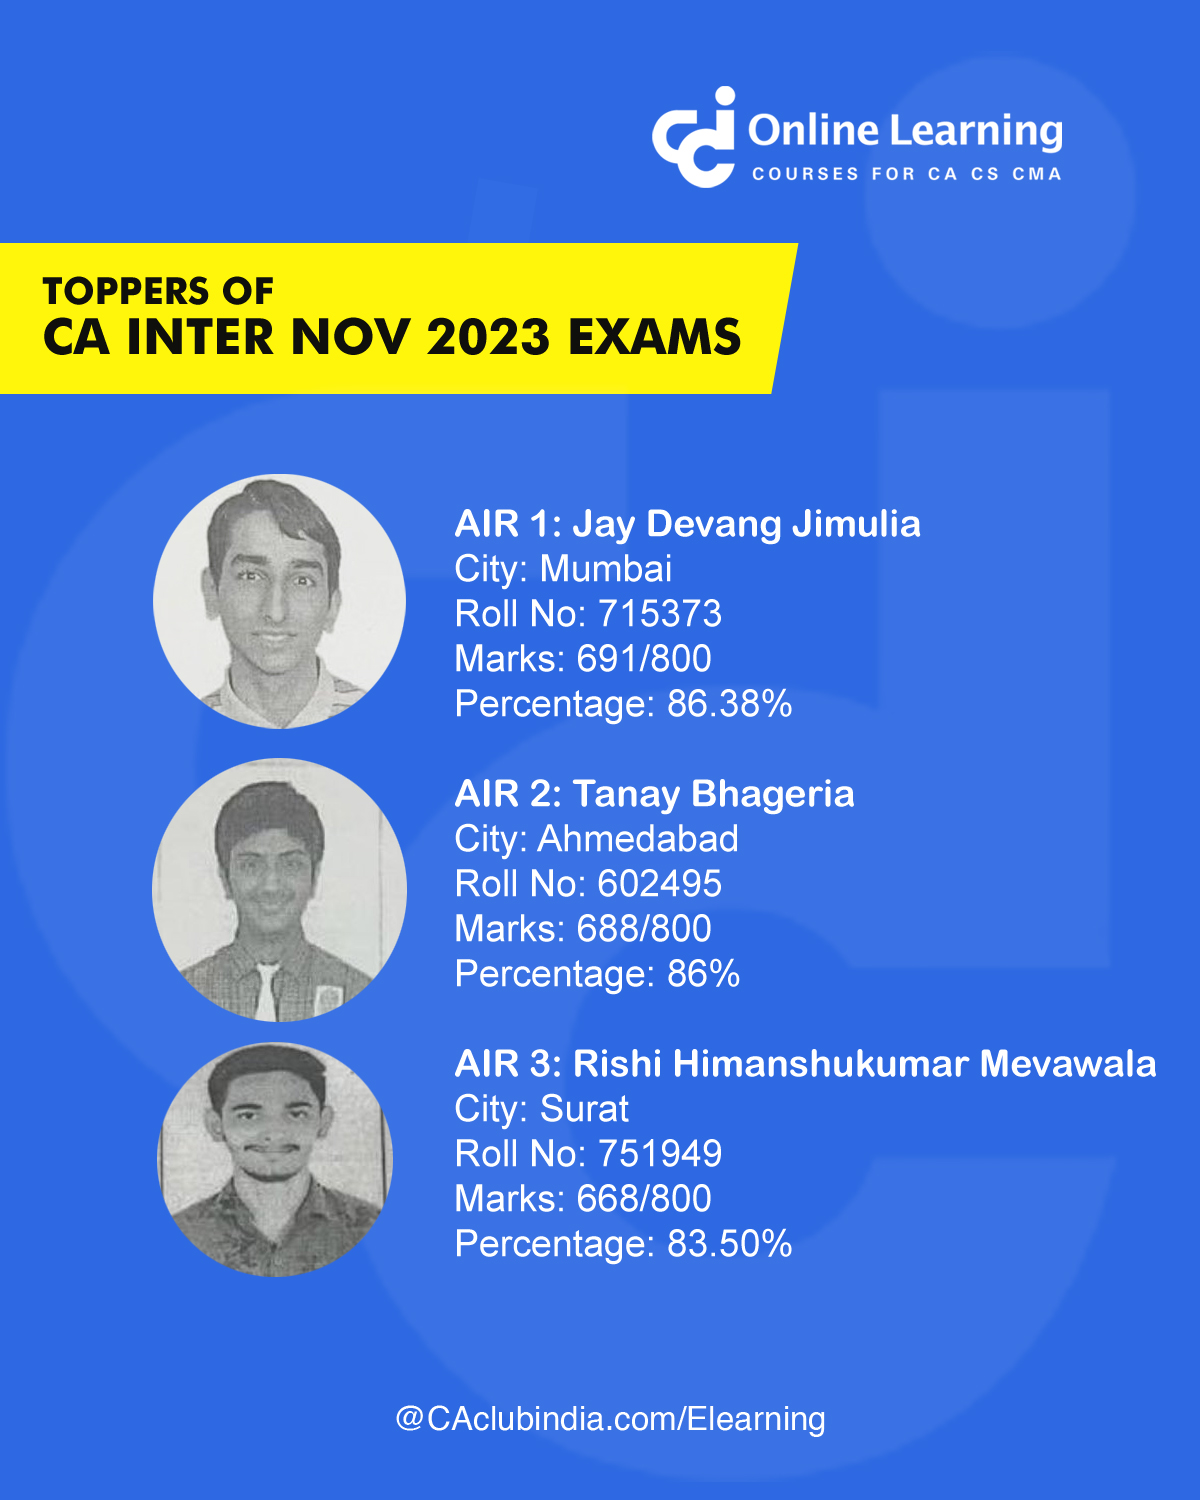 Toppers of CA Intermediate Examination held in Nov 2023